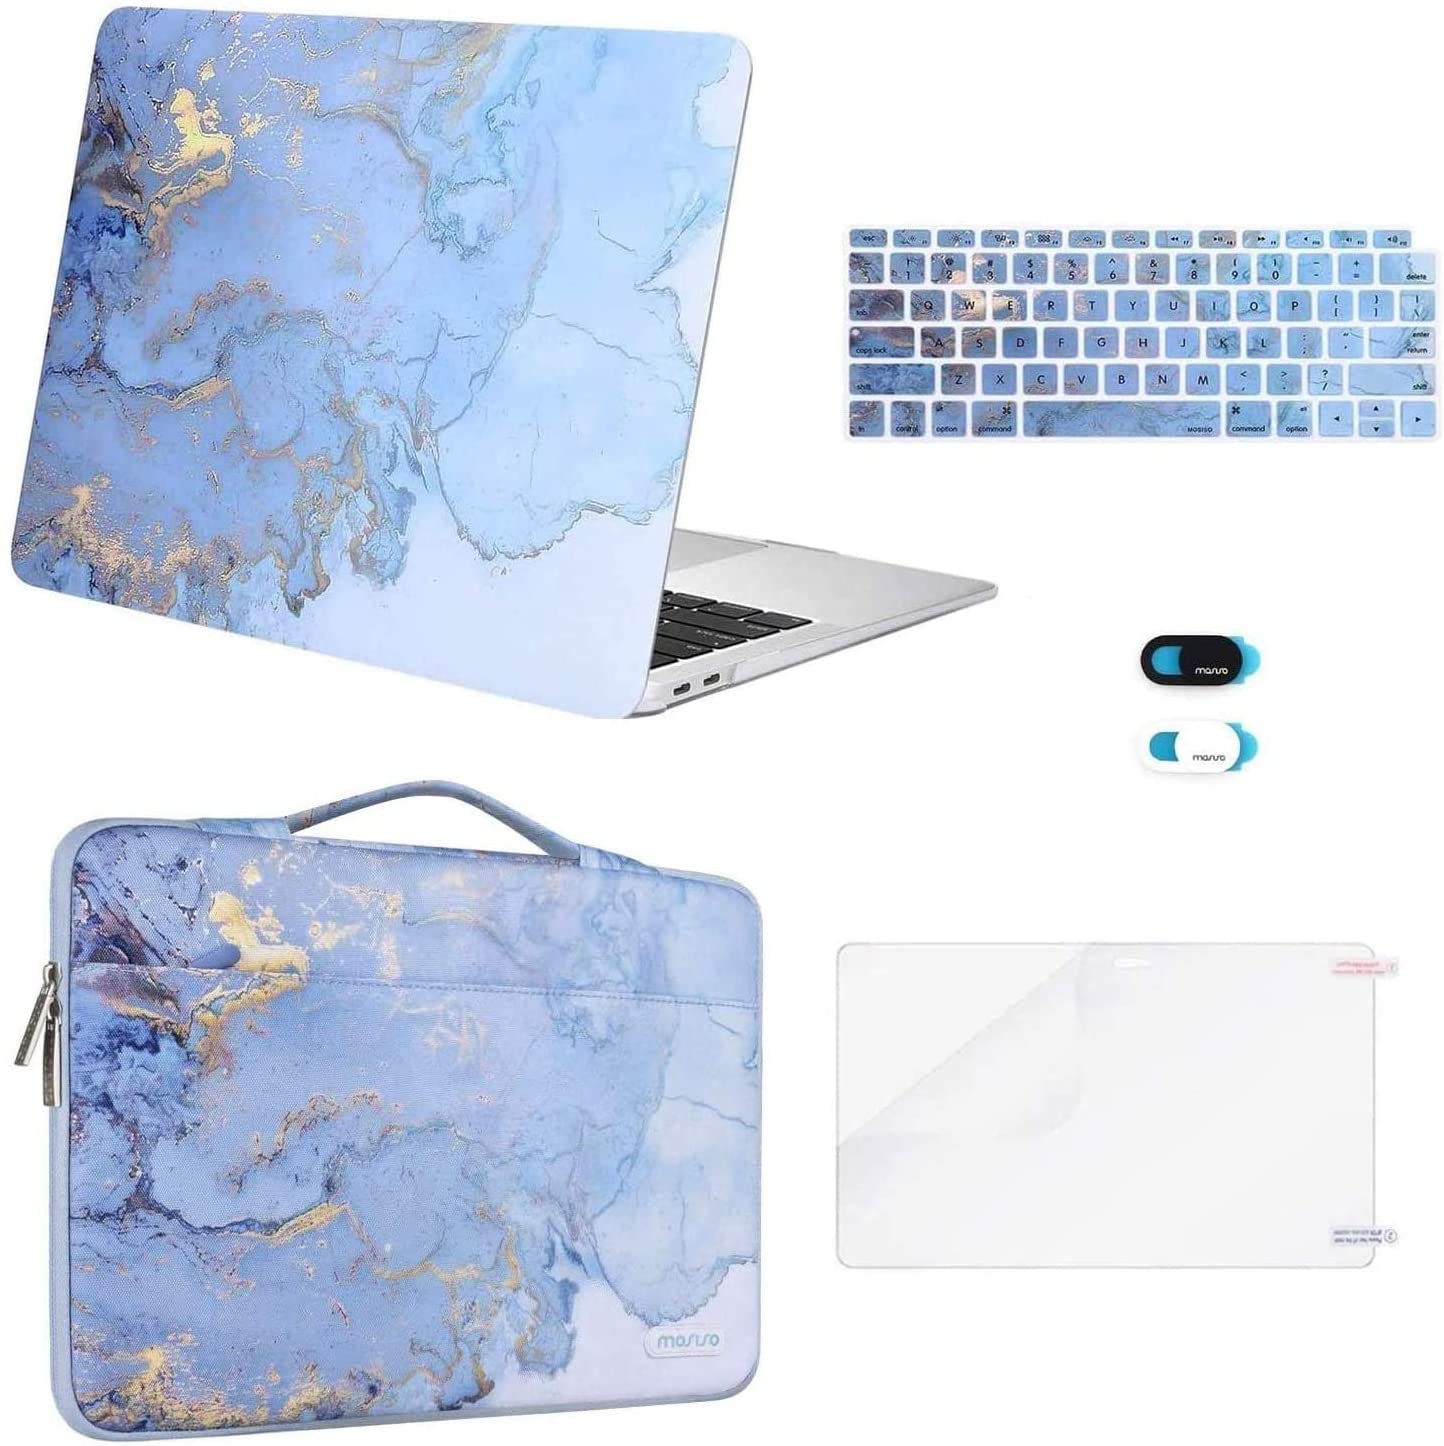 Louis Vuitton Macbook Air 13 Macbook Pro 13 2017 Plastic case